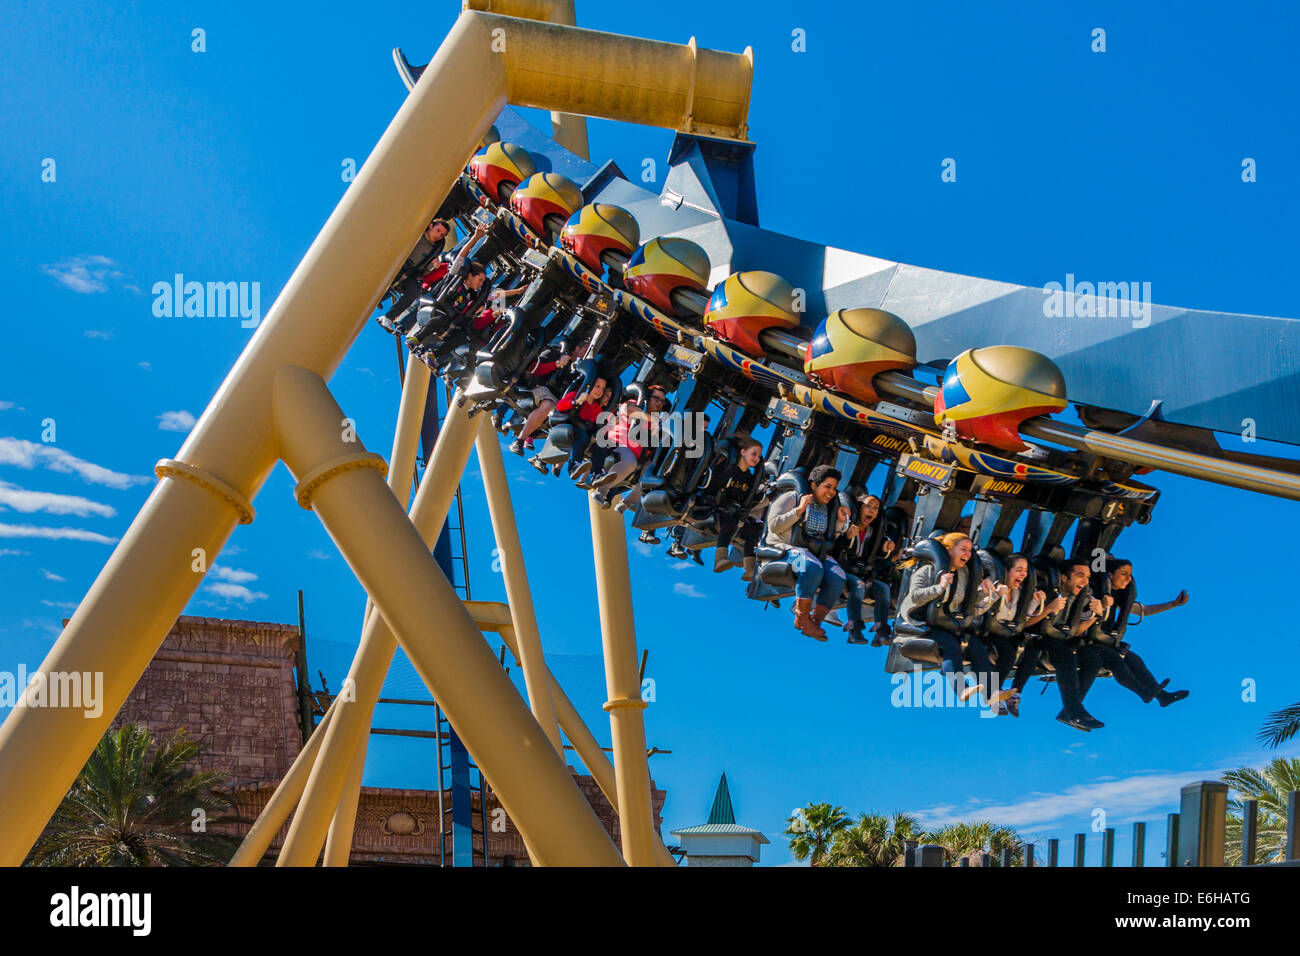 Park Guests Riding Montu Roller Coaster At Busch Gardens In Tampa